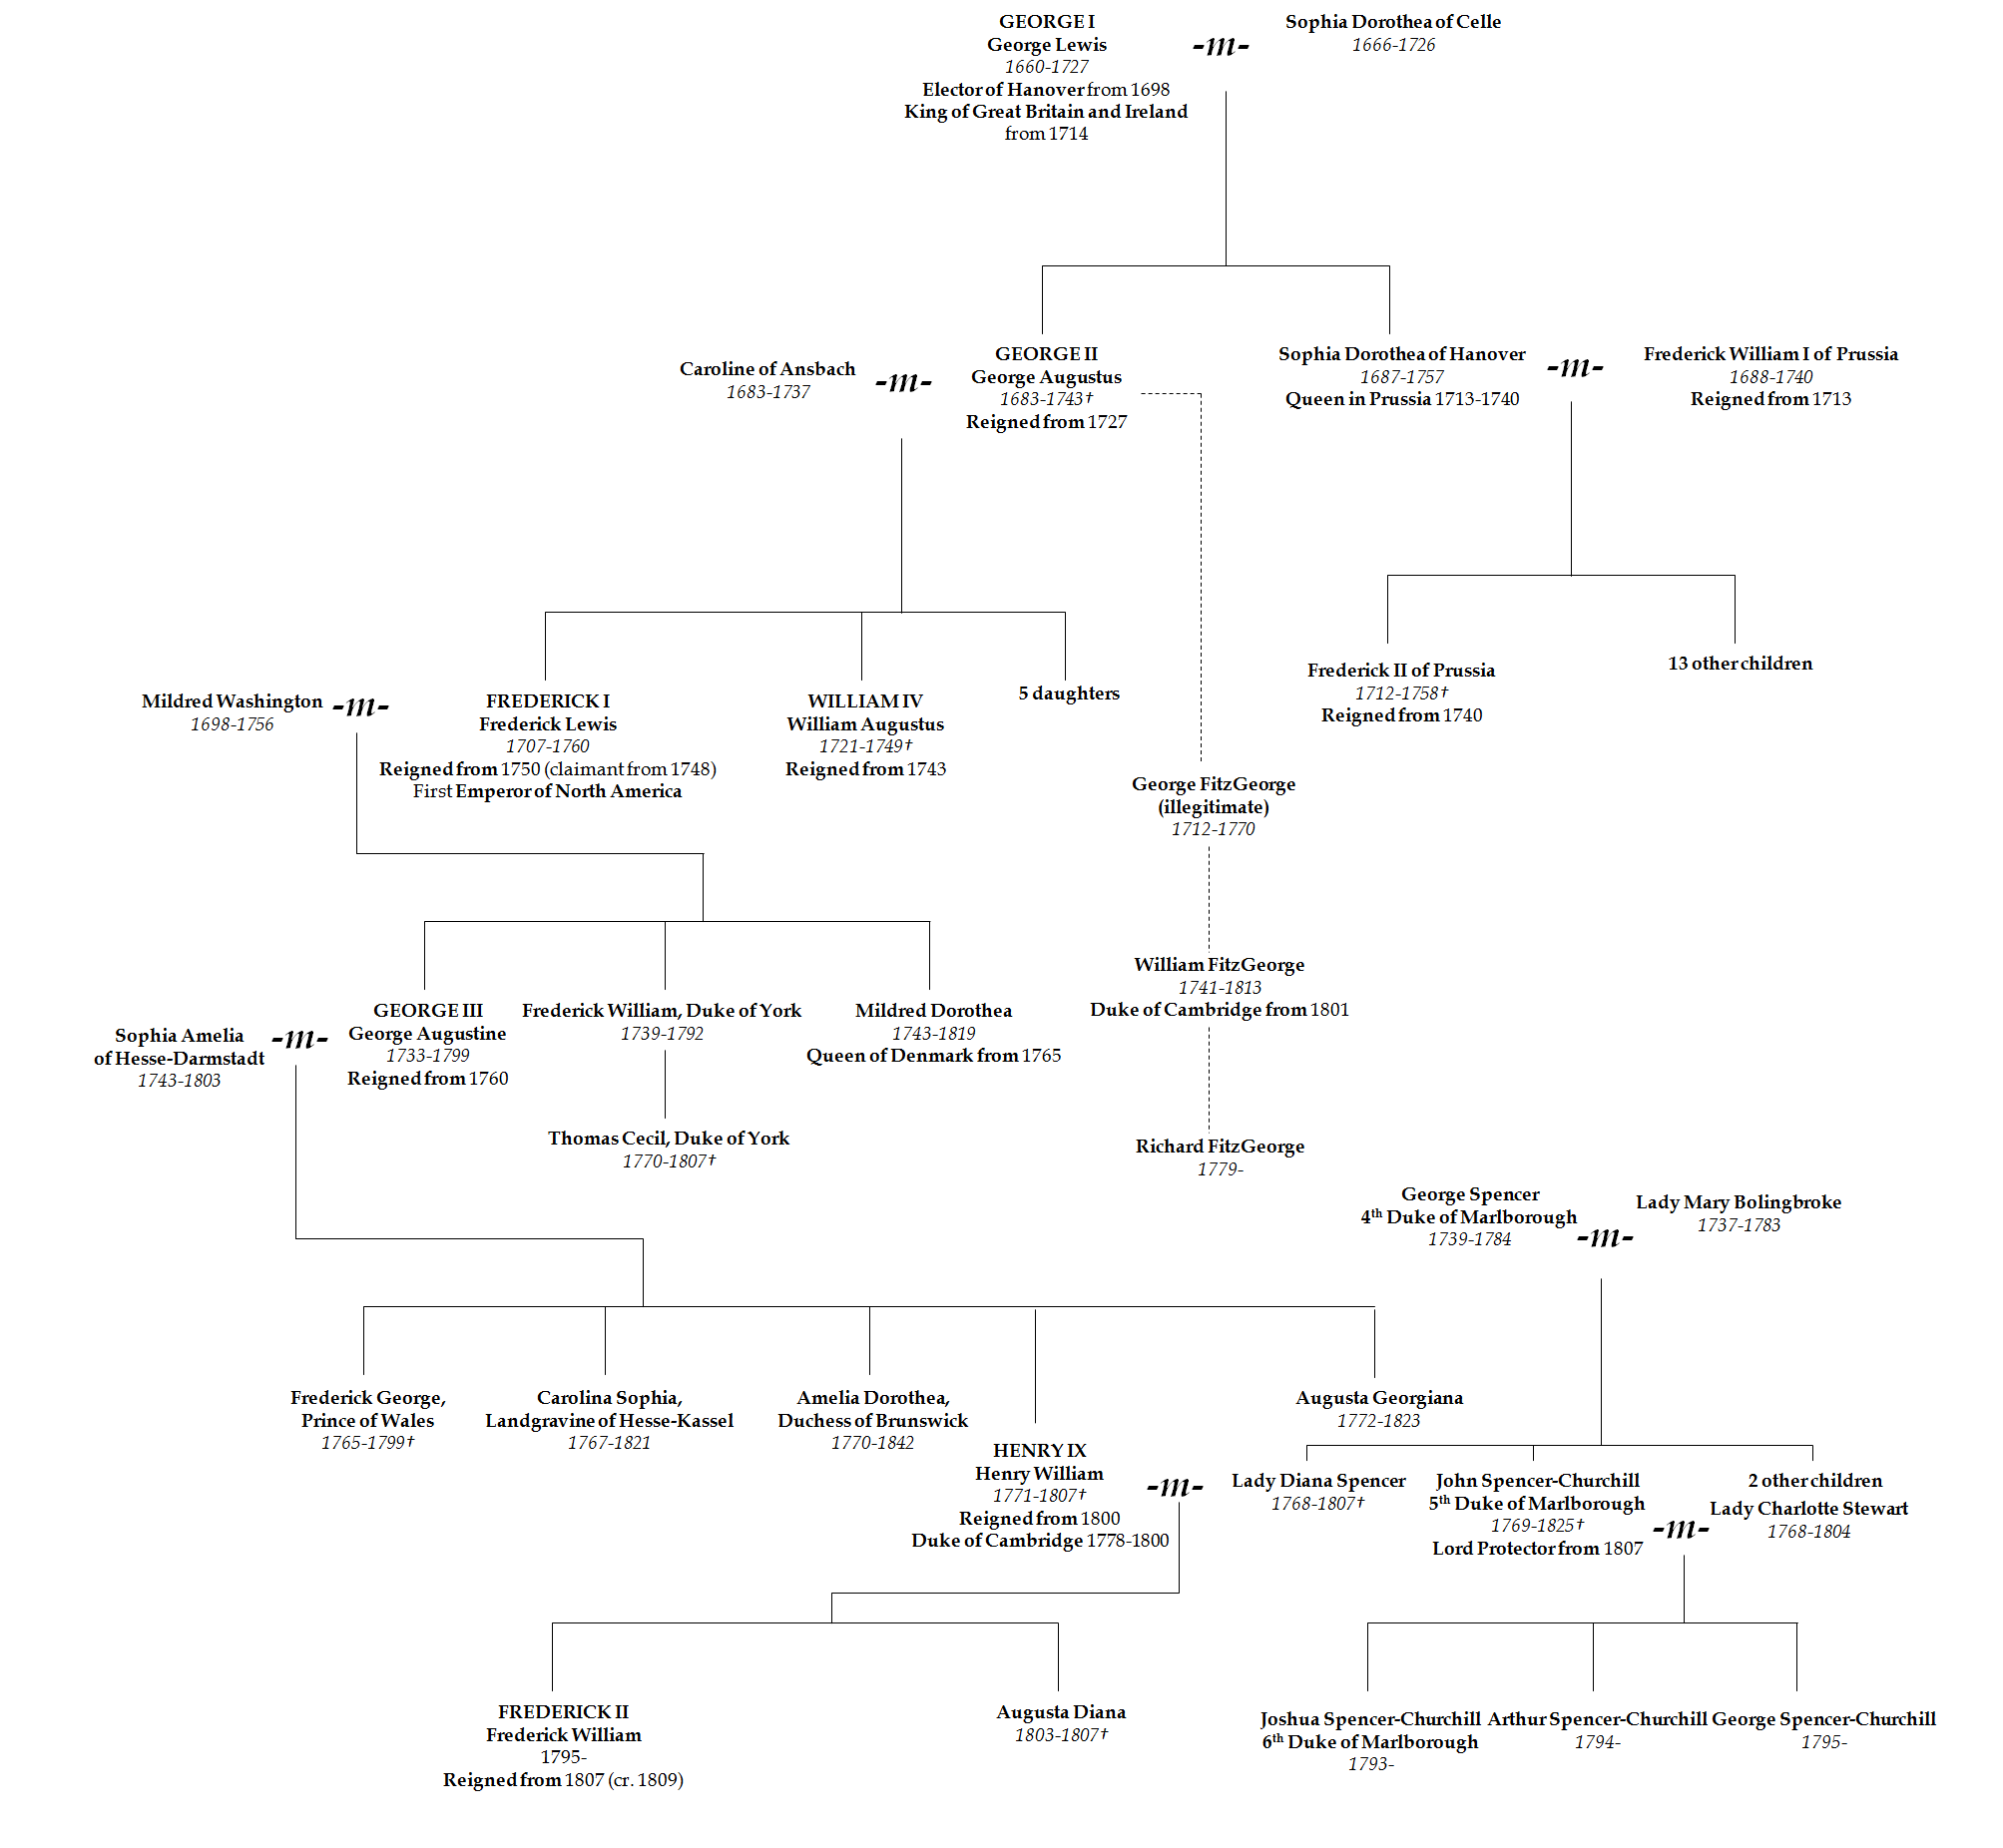 Hanover family tree.png